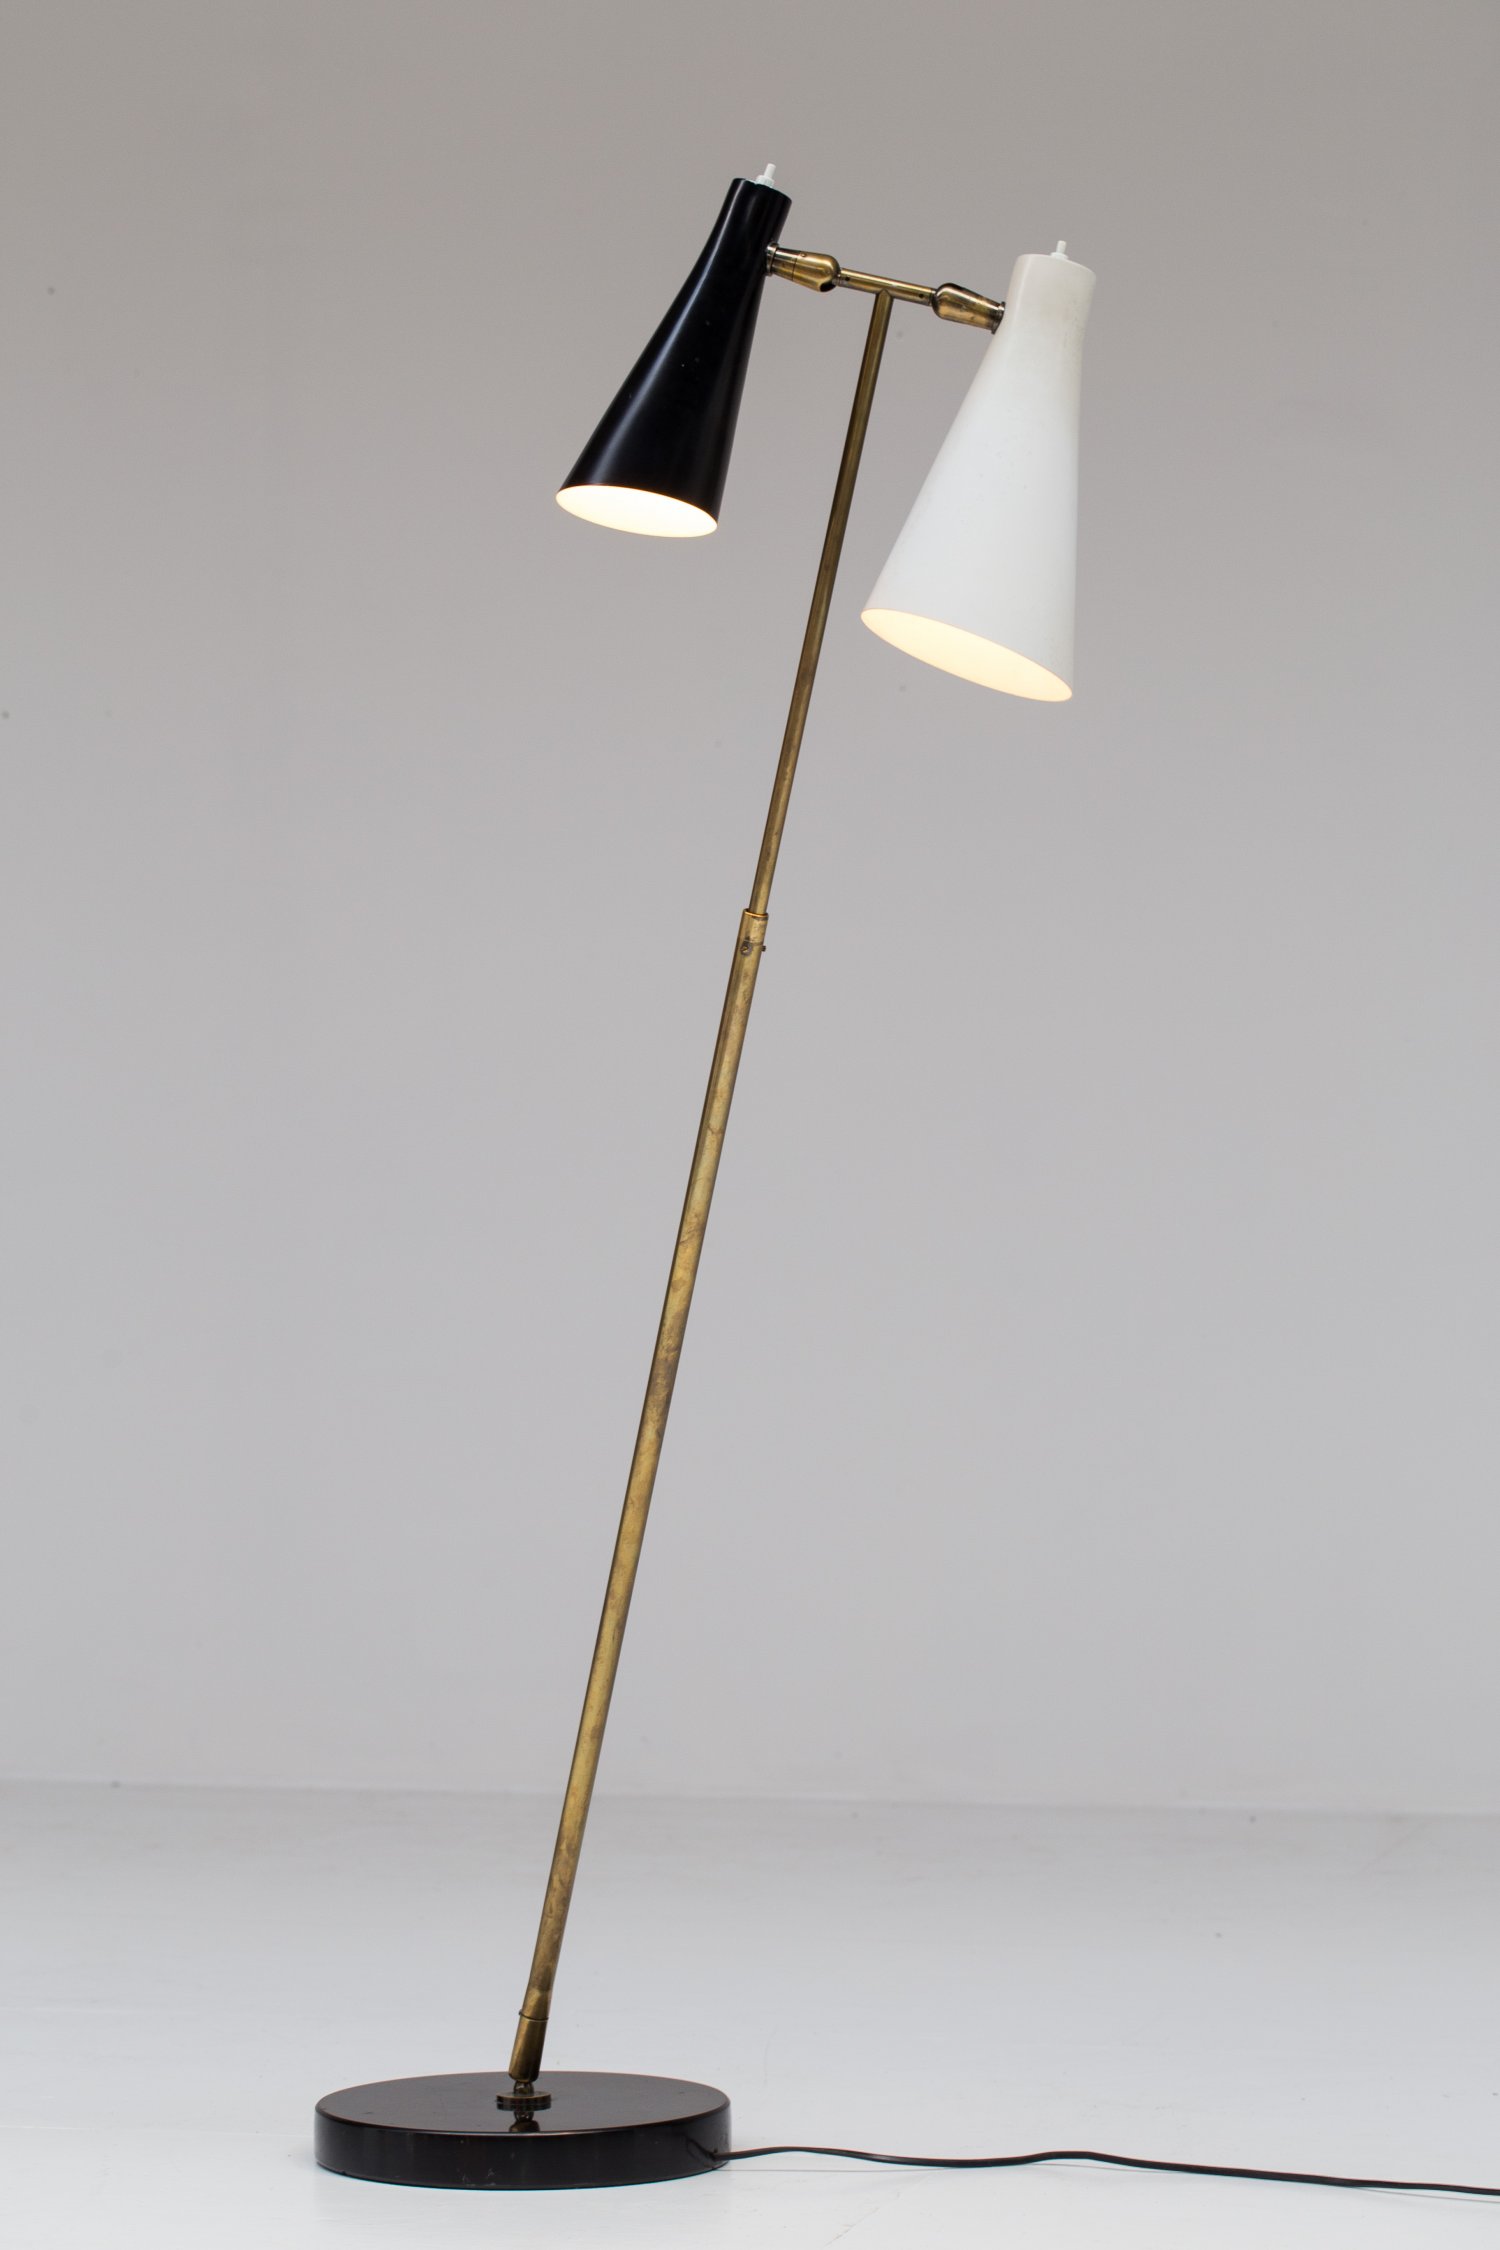 Giuseppe Ostuni floorlamp 